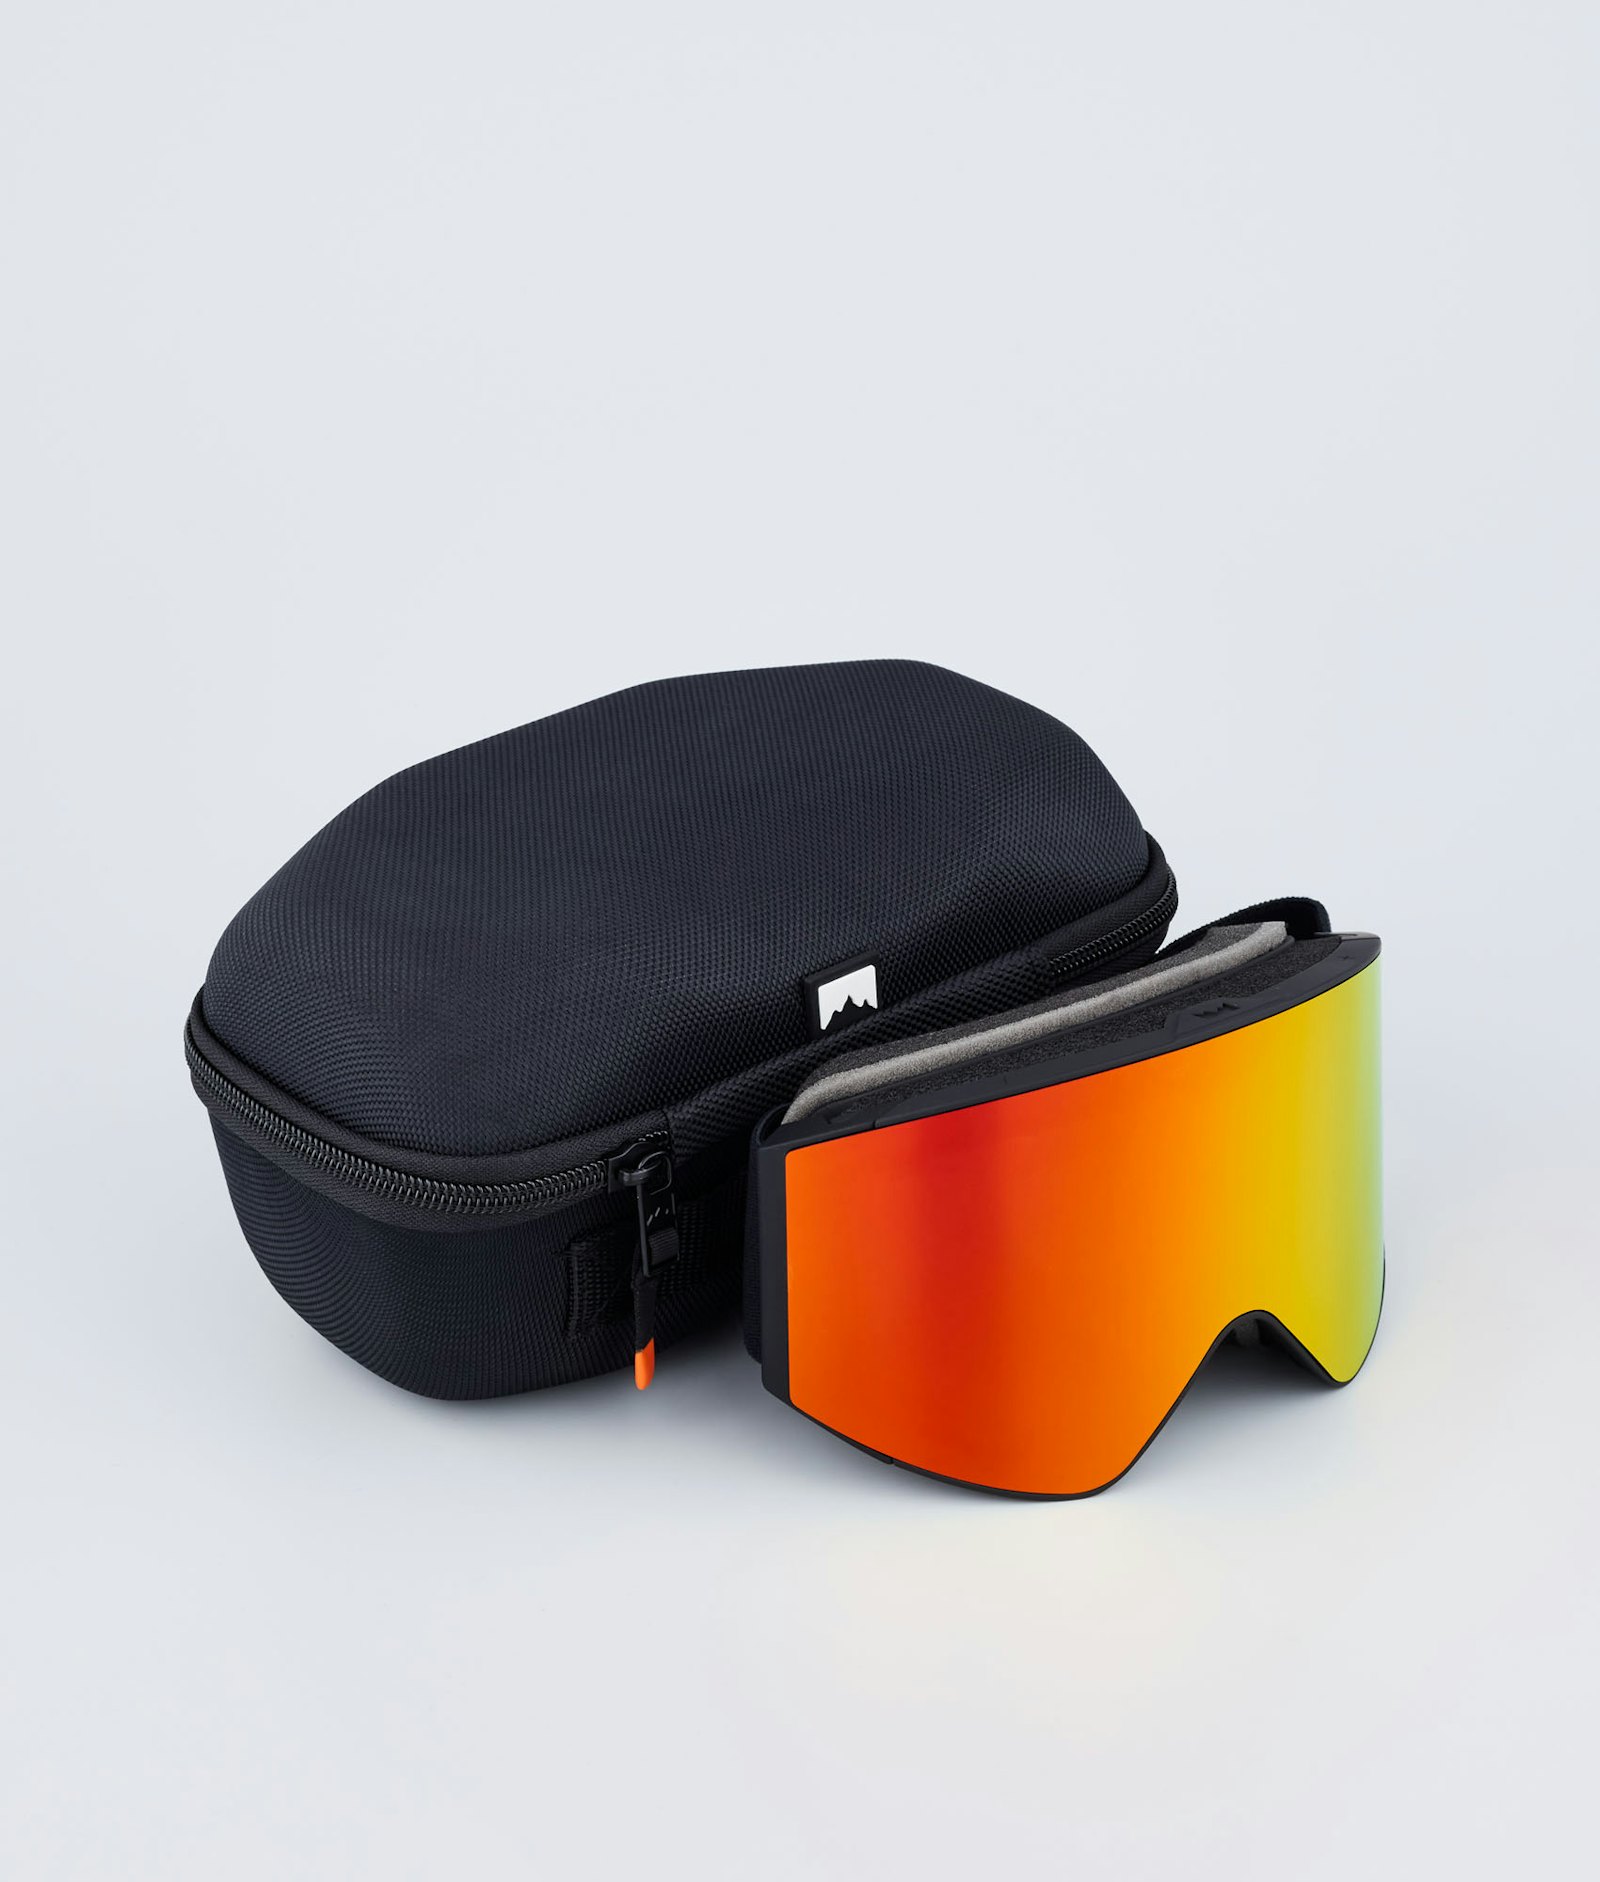 Montec Scope 2021 Ski Goggles Black/Ruby Red Mirror